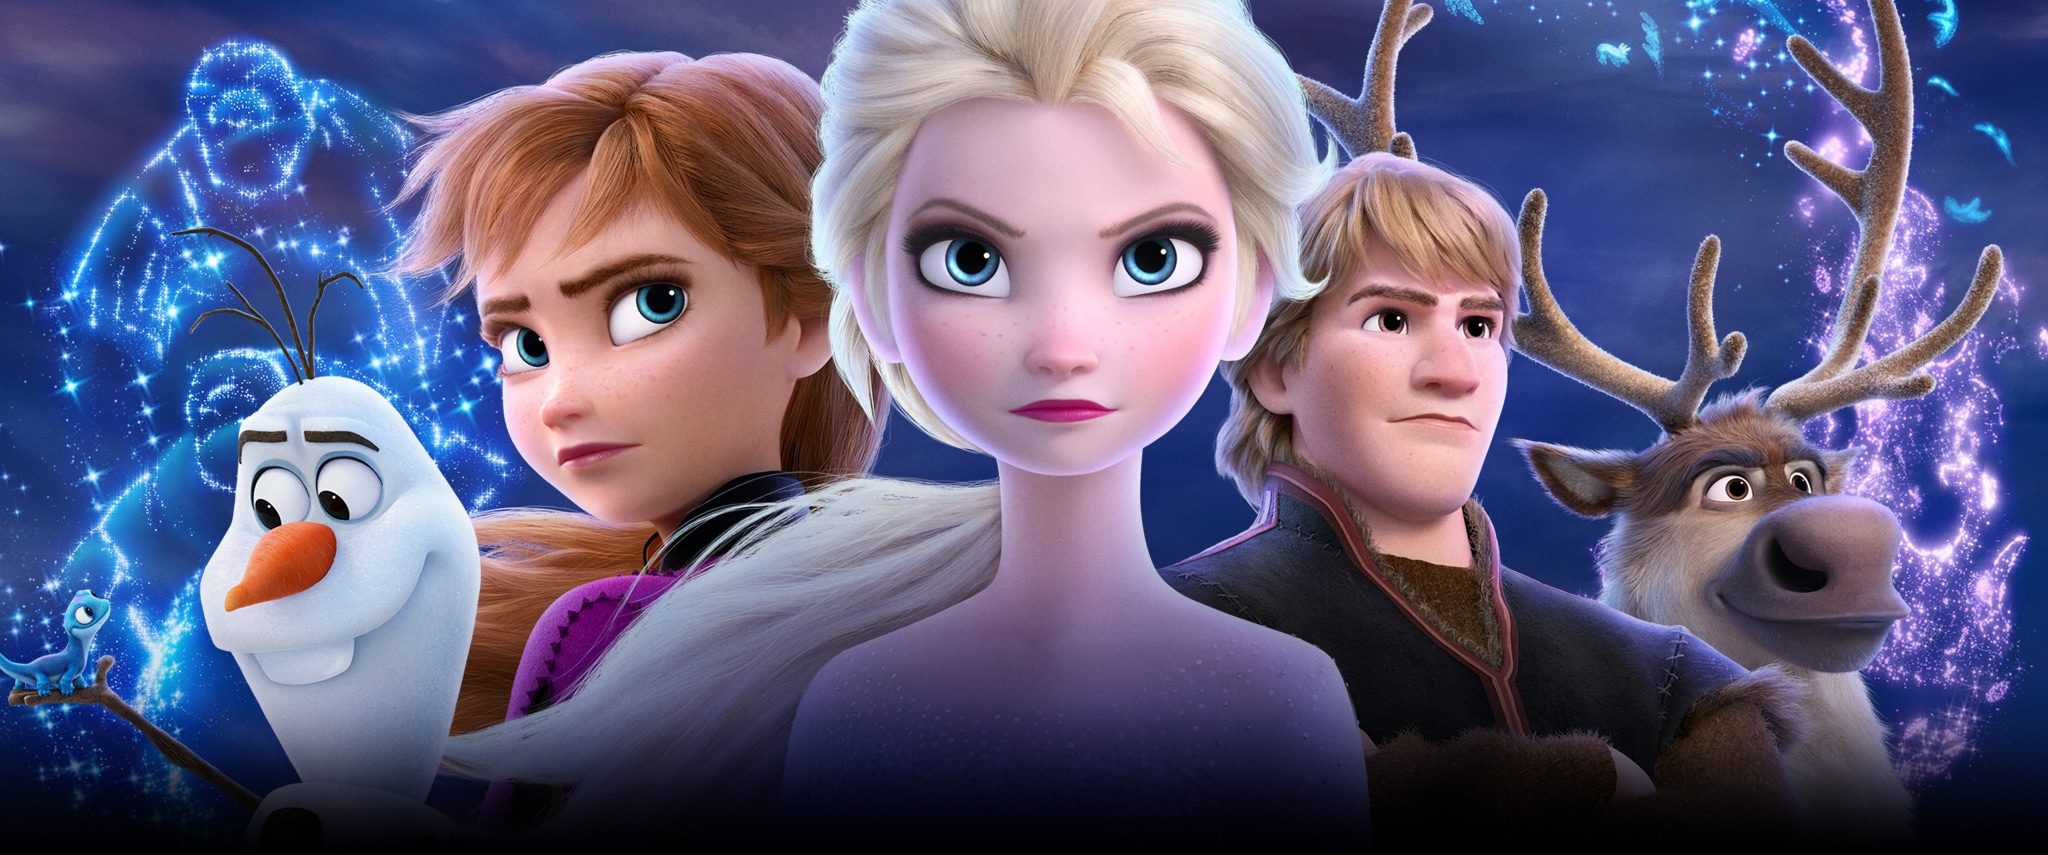 Disney Frozen Magic: 5 Amazing Facts Over a Decade